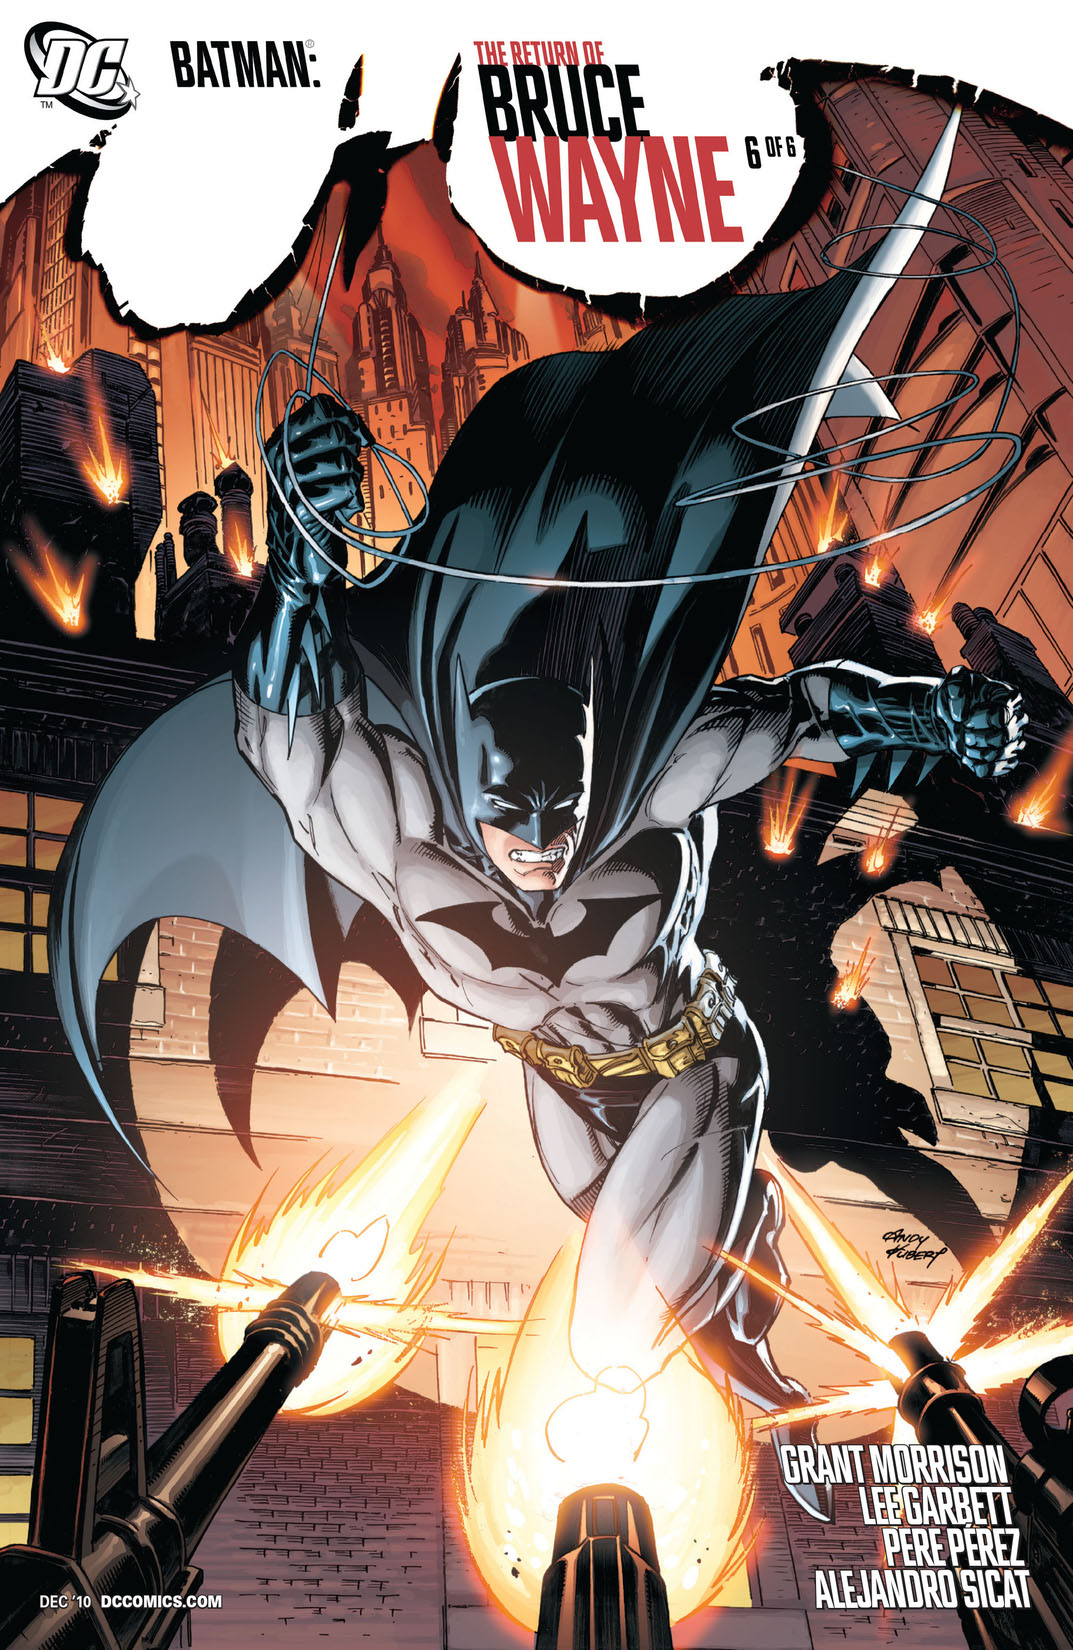 Batman: The Return of Bruce Wayne #6 preview images